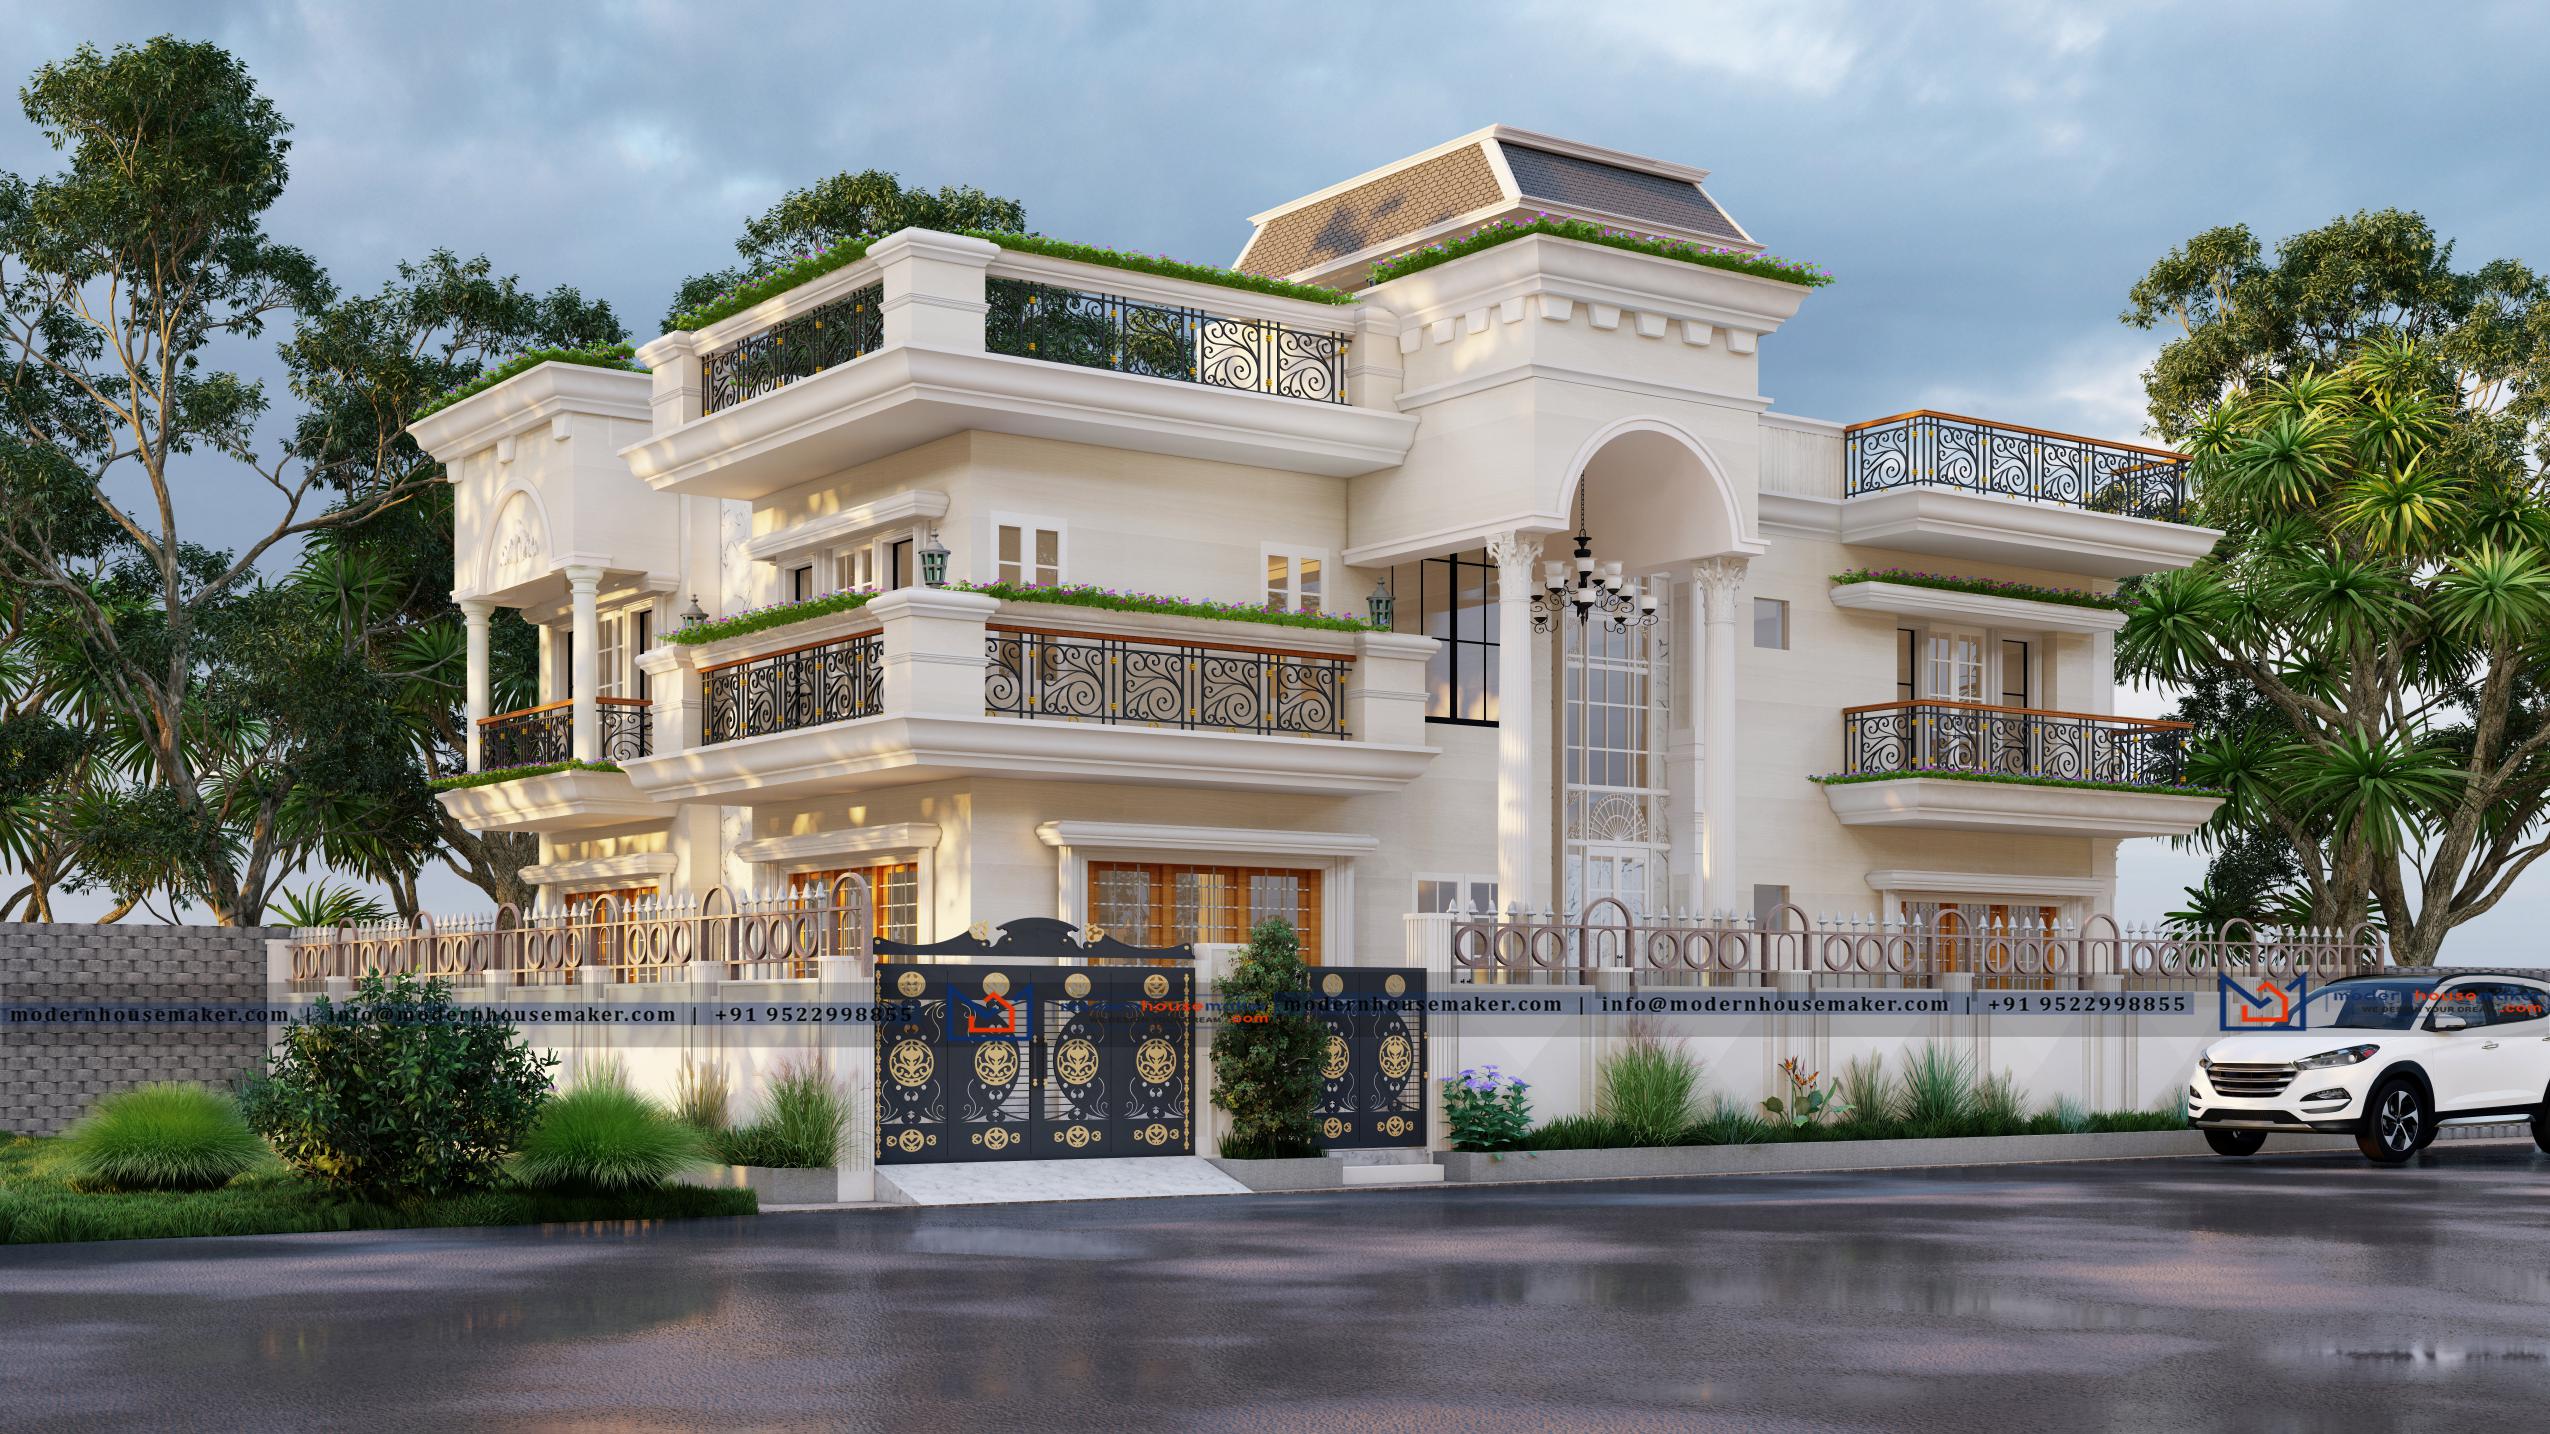 40x30 Elevation Design Indore - 40*30 House Plan India